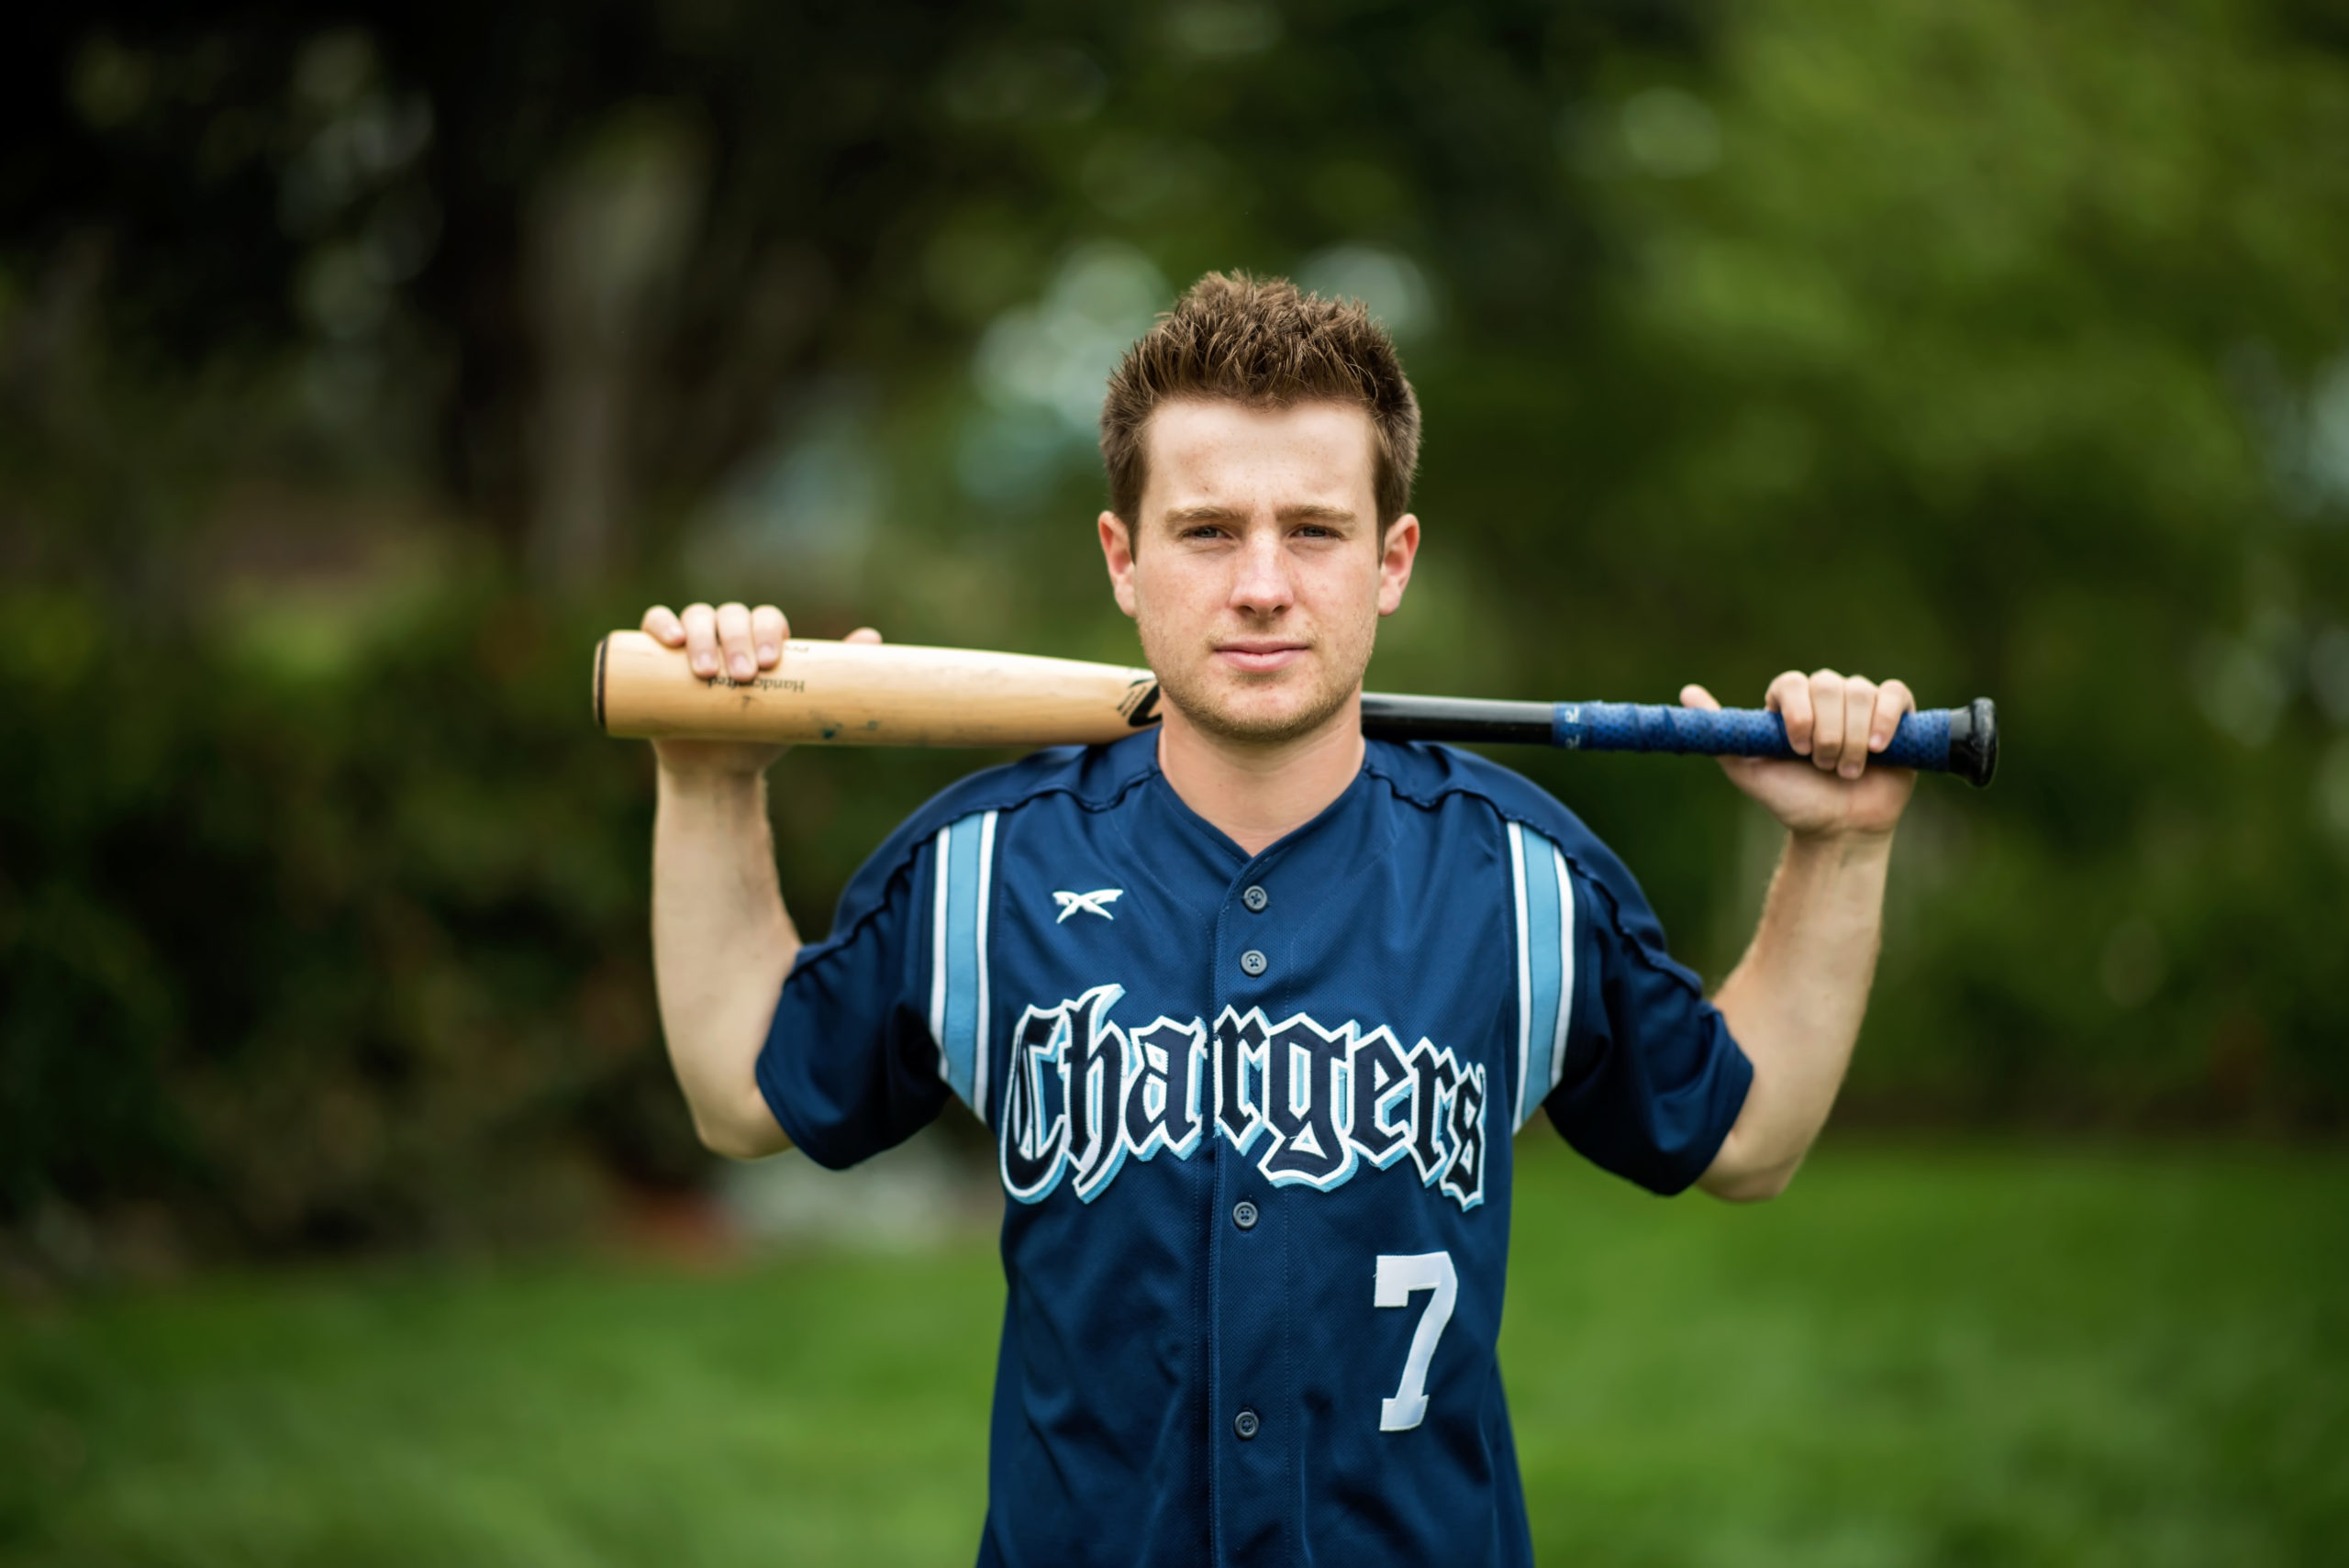 Baseball Senior Pictures  Photoshoot Ideas for Baseball Players